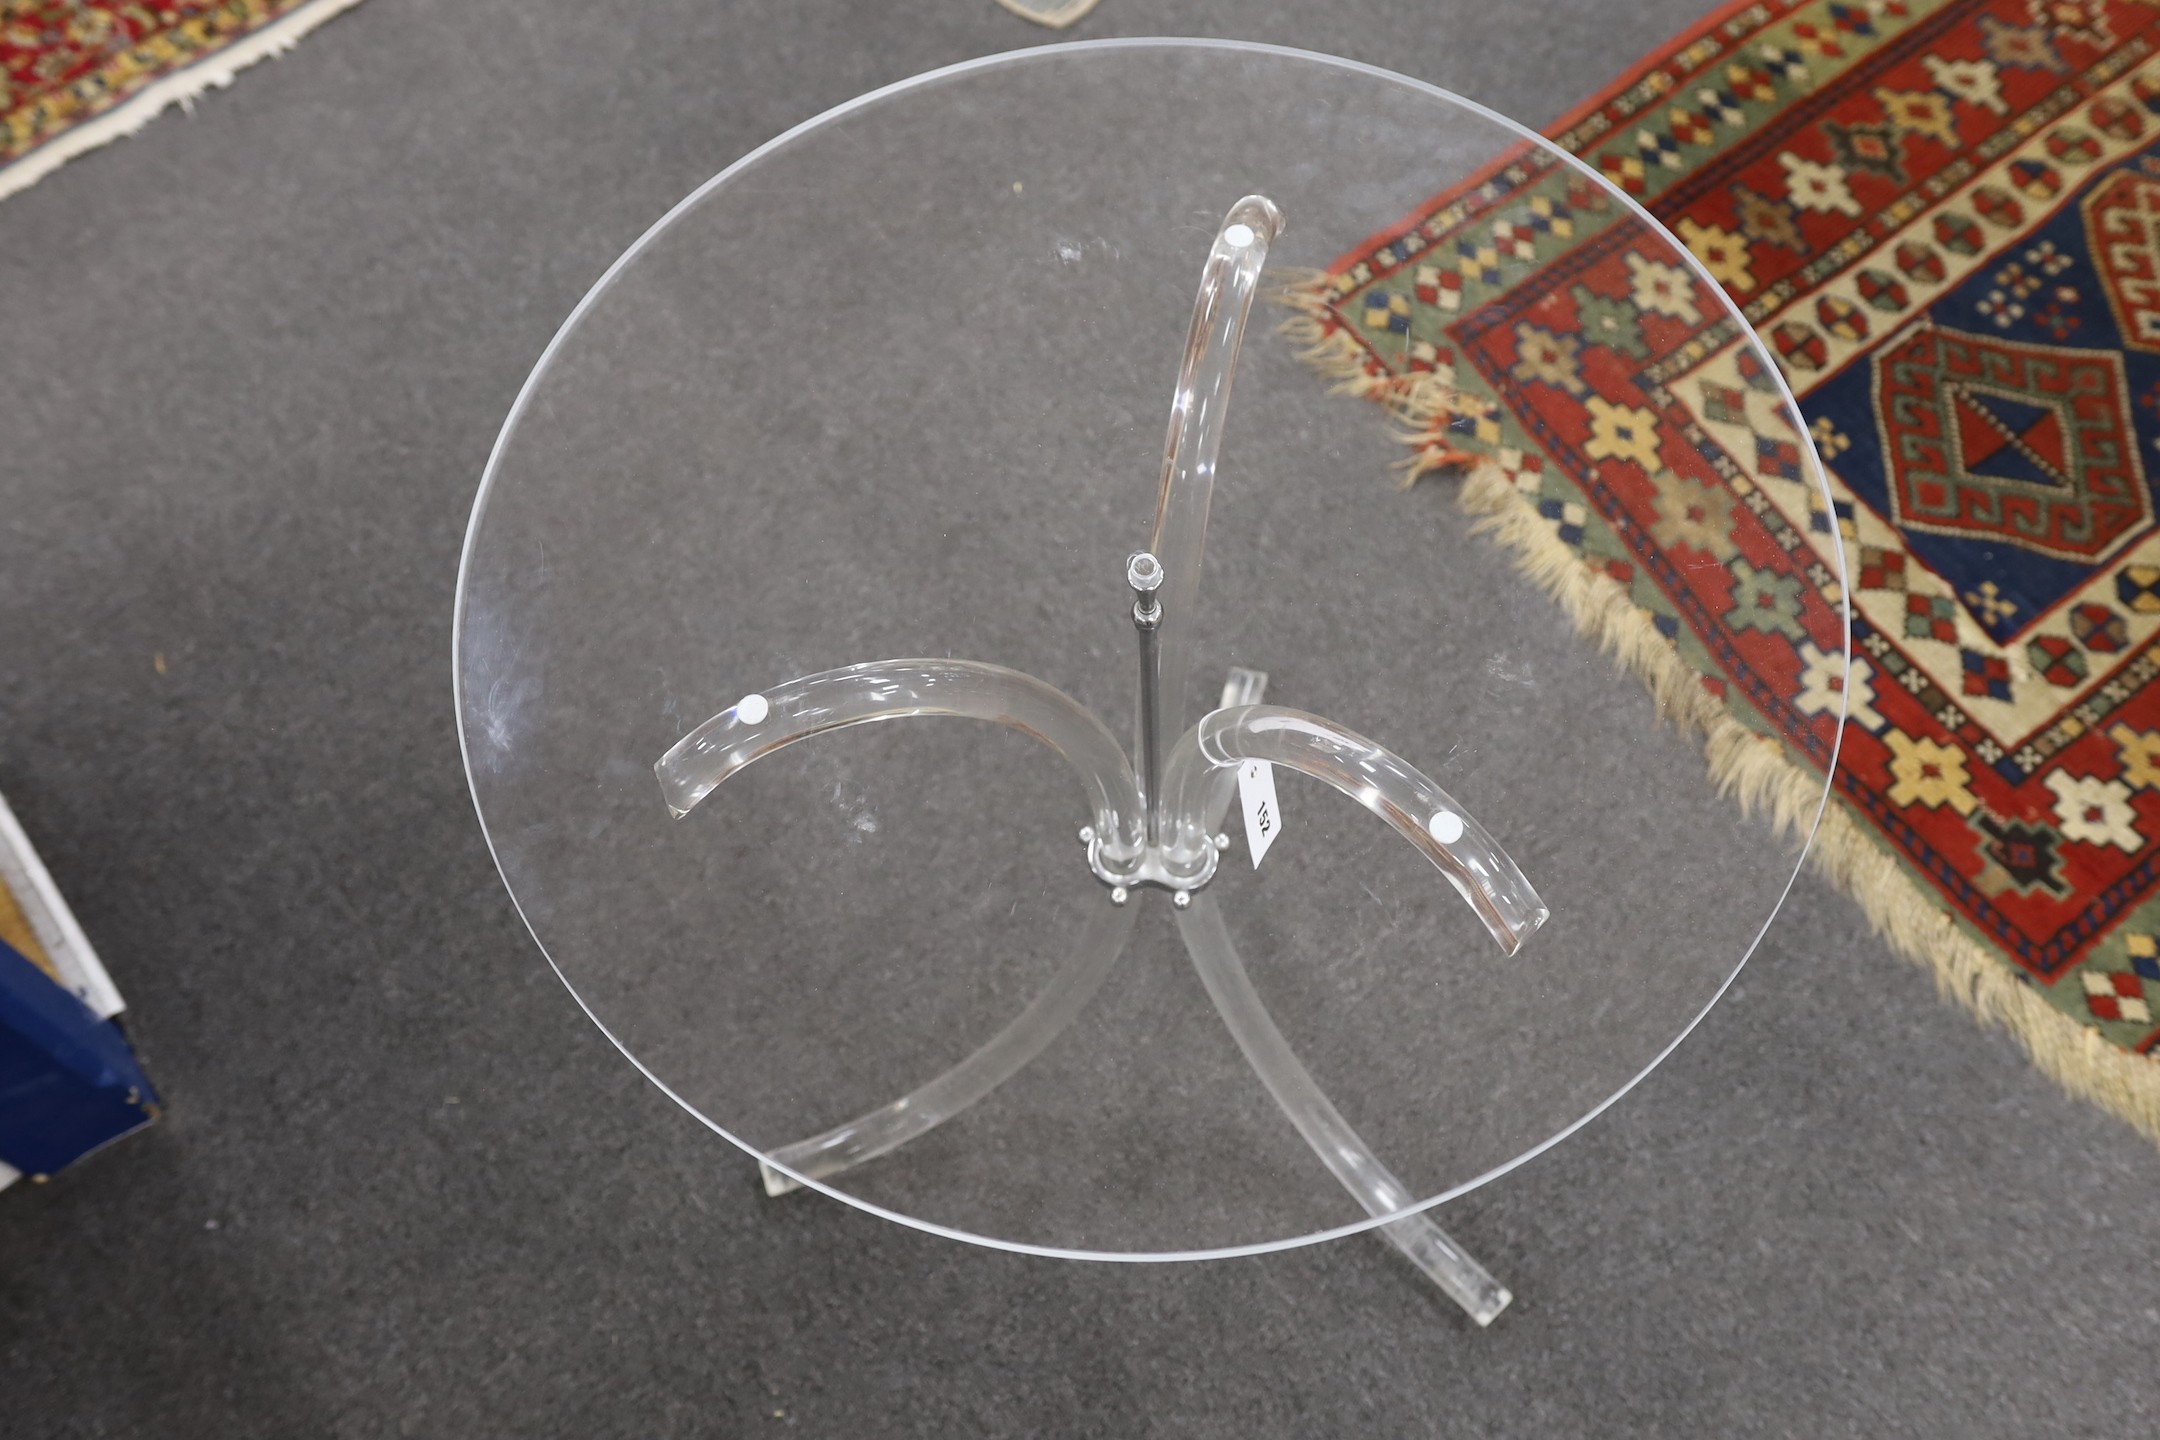 A Charles Hollis Jones style circular lucite tripod table, diameter 67cm height 69cm